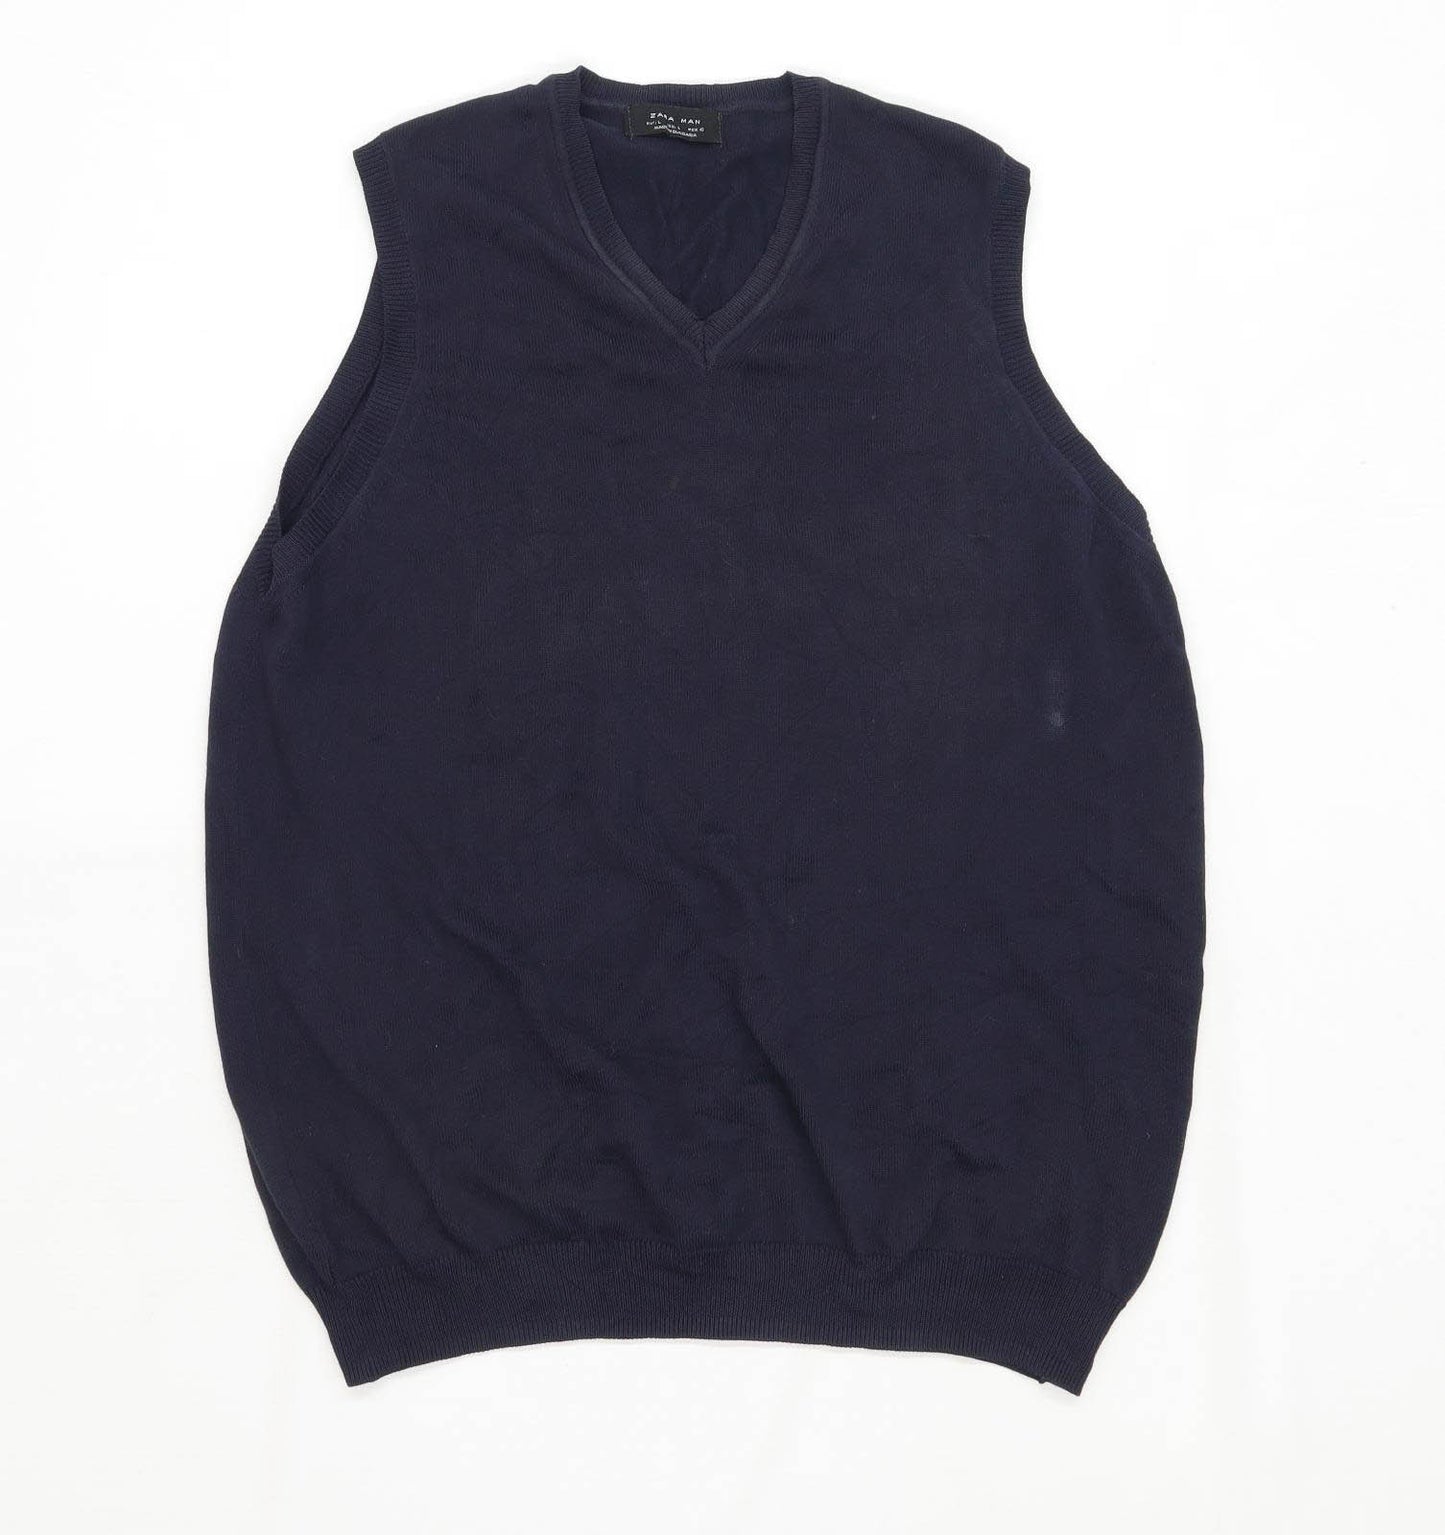 Zara Mens Size L Cotton Blue V-Neck Jumper